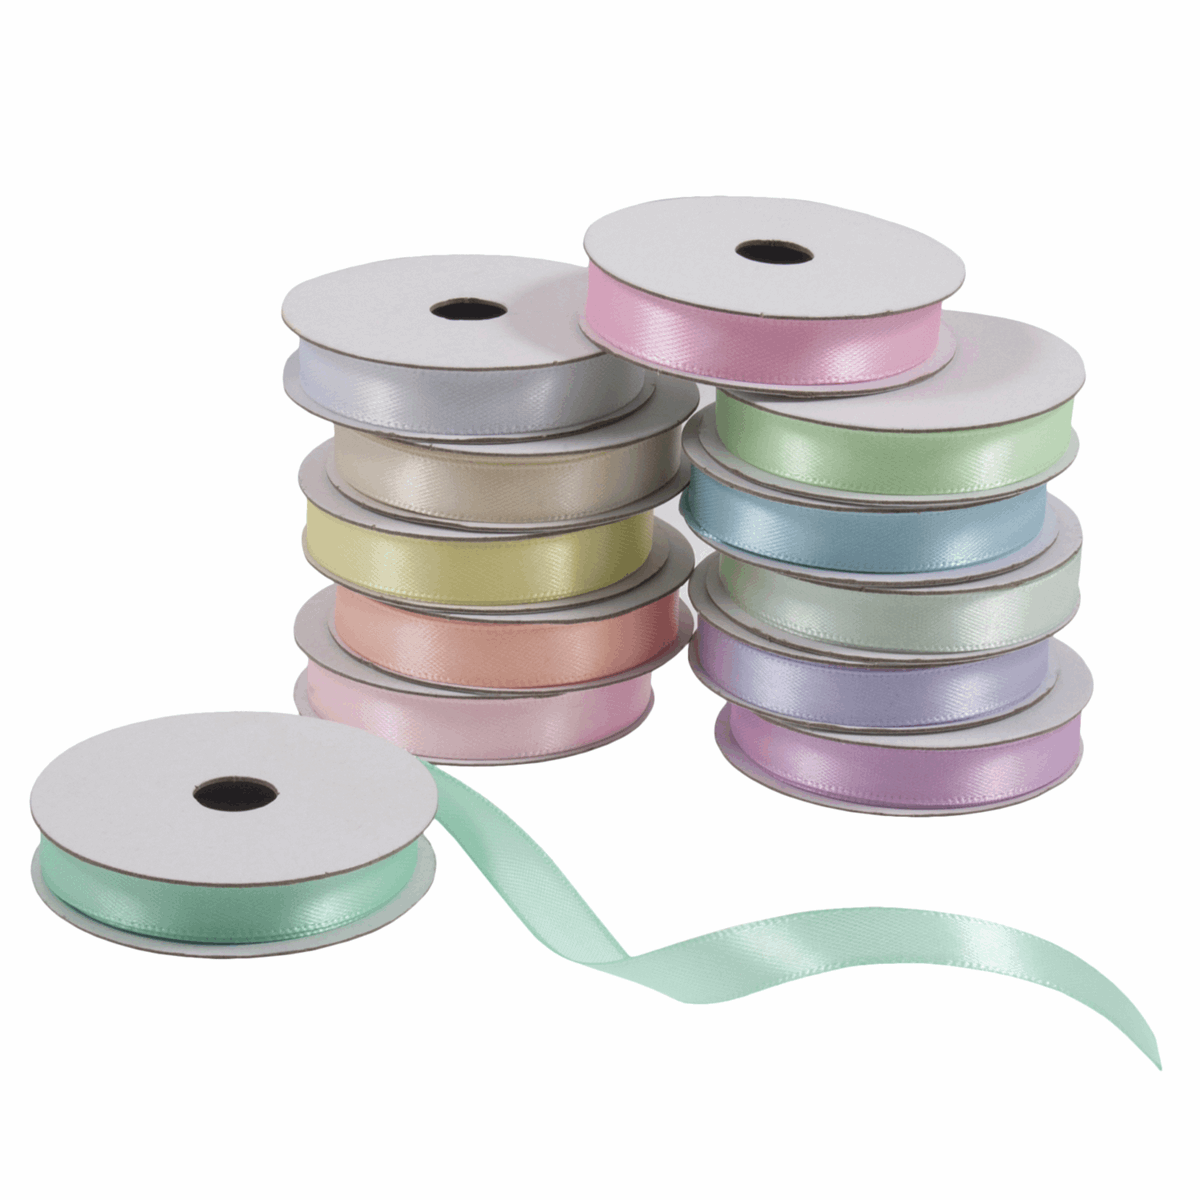 Trimits Pastel Satin Ribbon Bag - 2m x 10mm (Pack of 12)